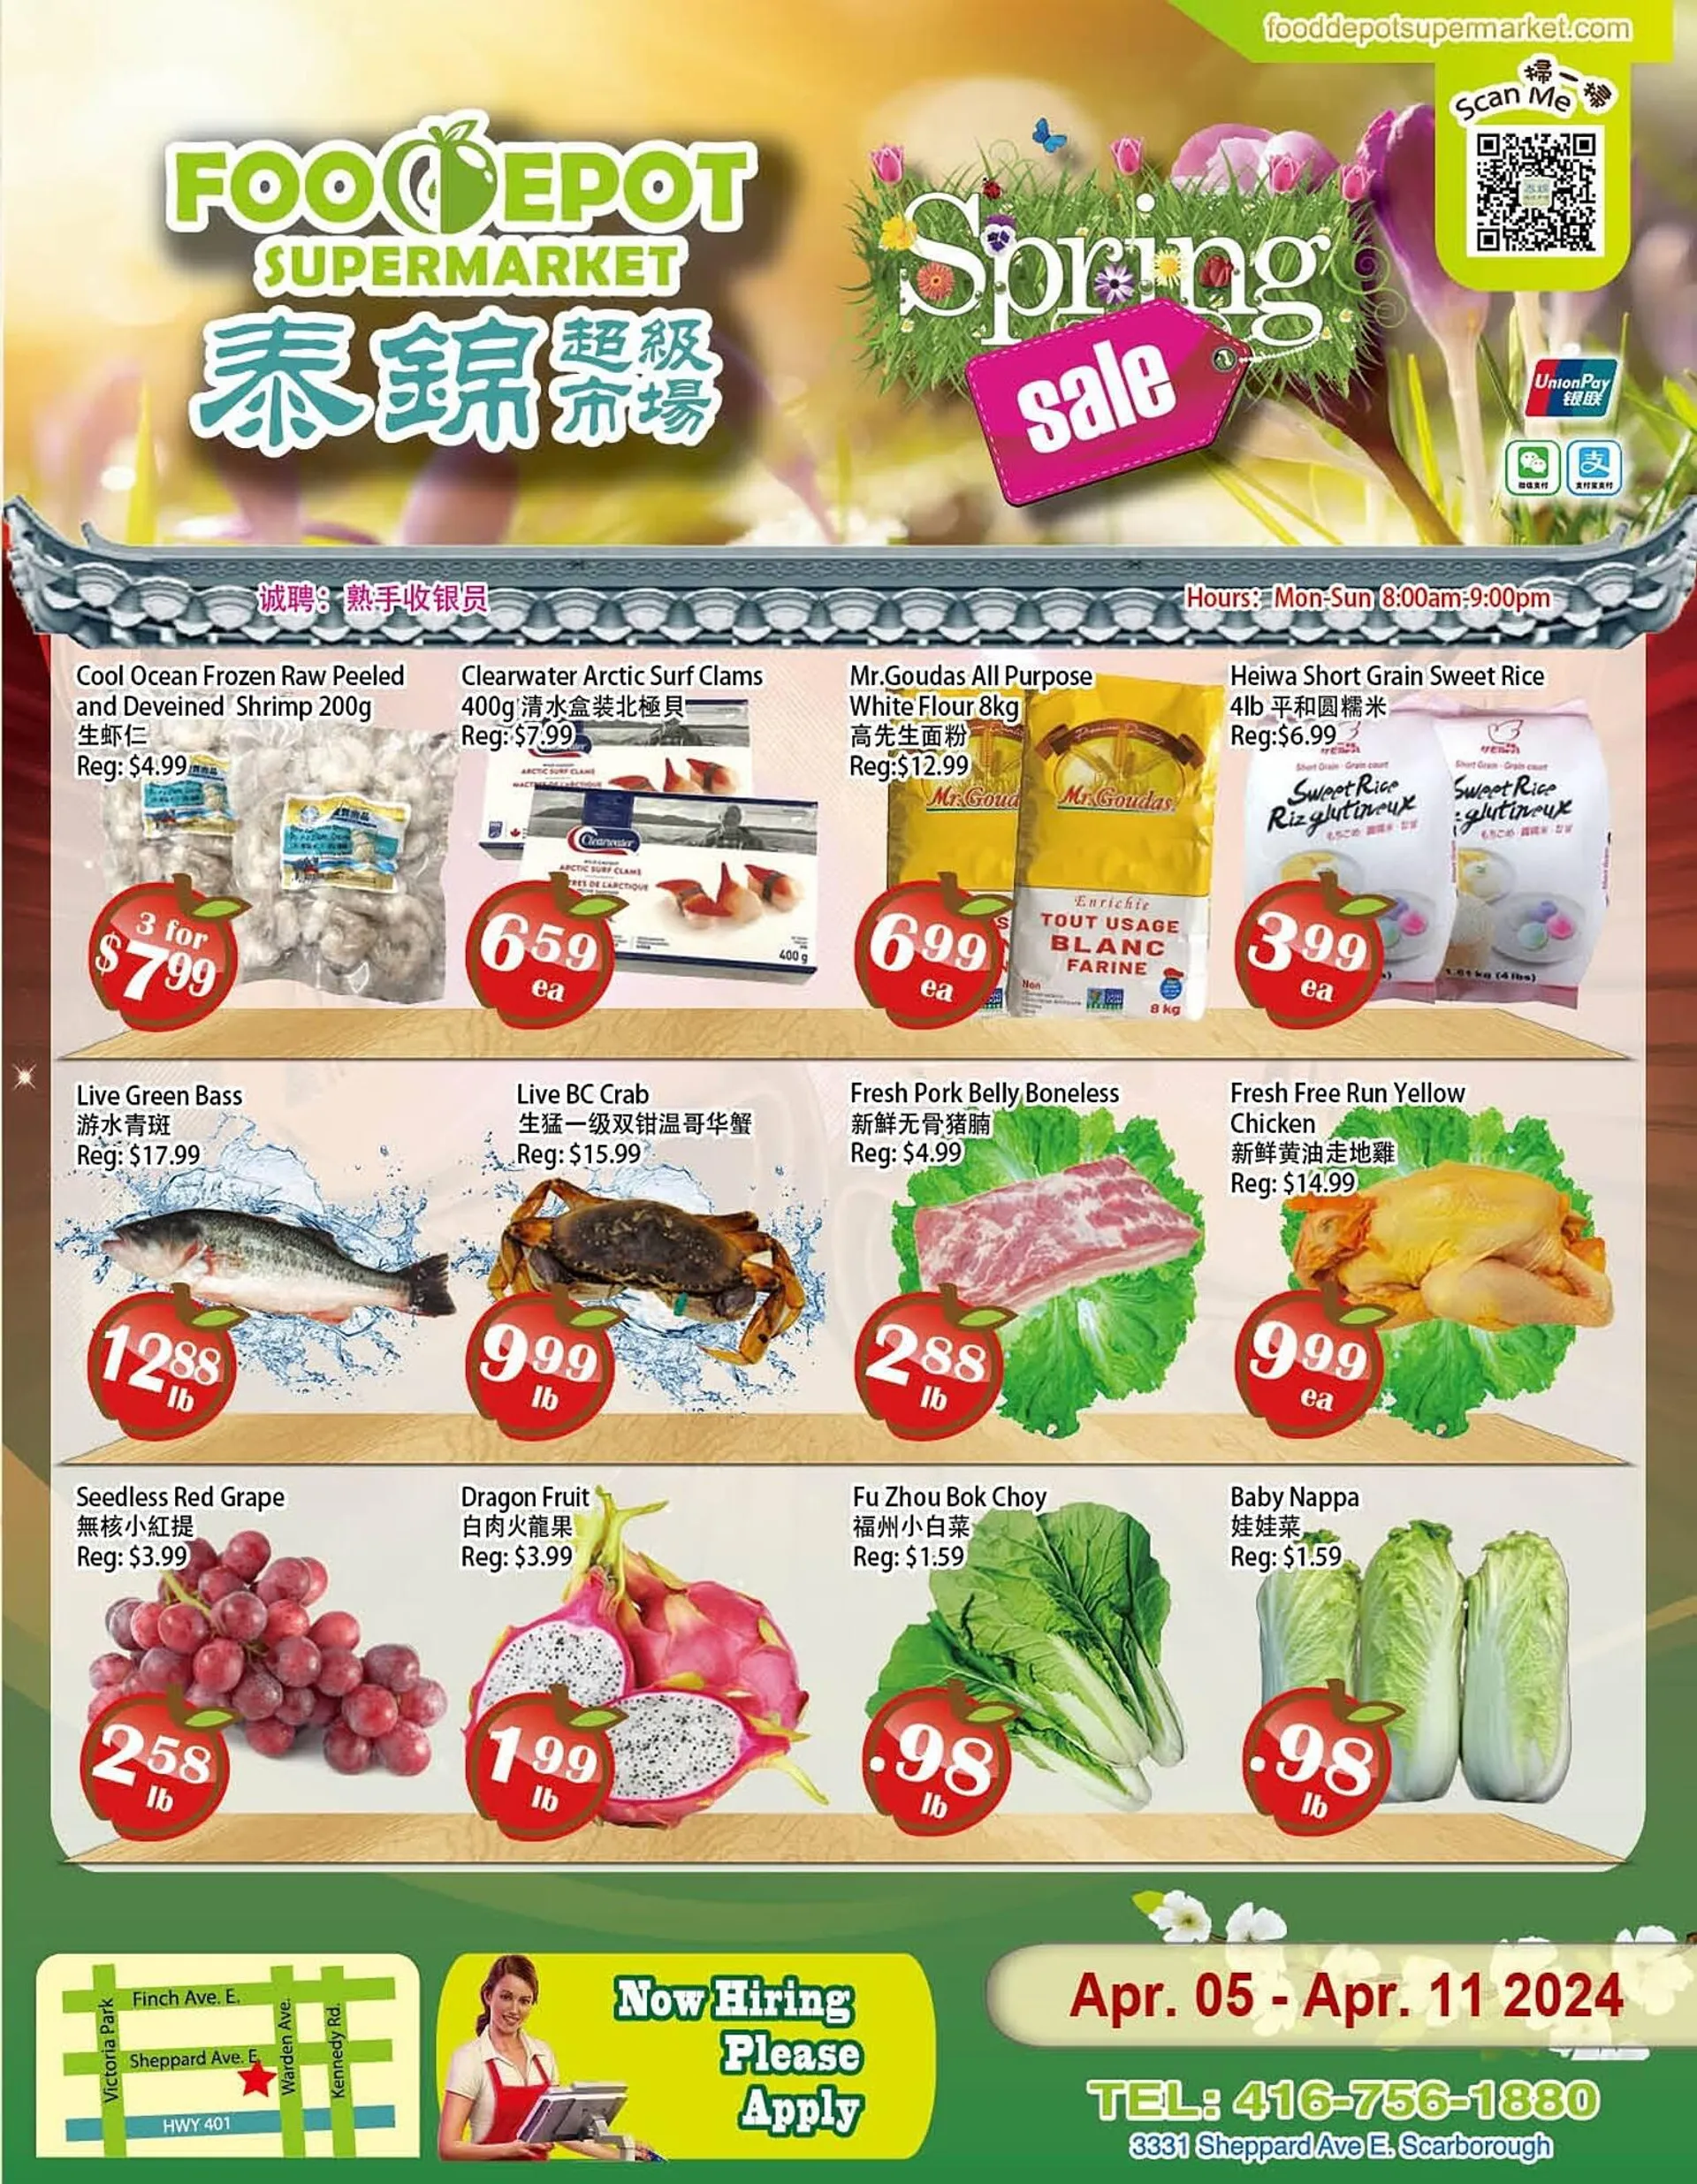 Food Depot Supermarket flyer from April 5 to April 11 2024 - flyer page 